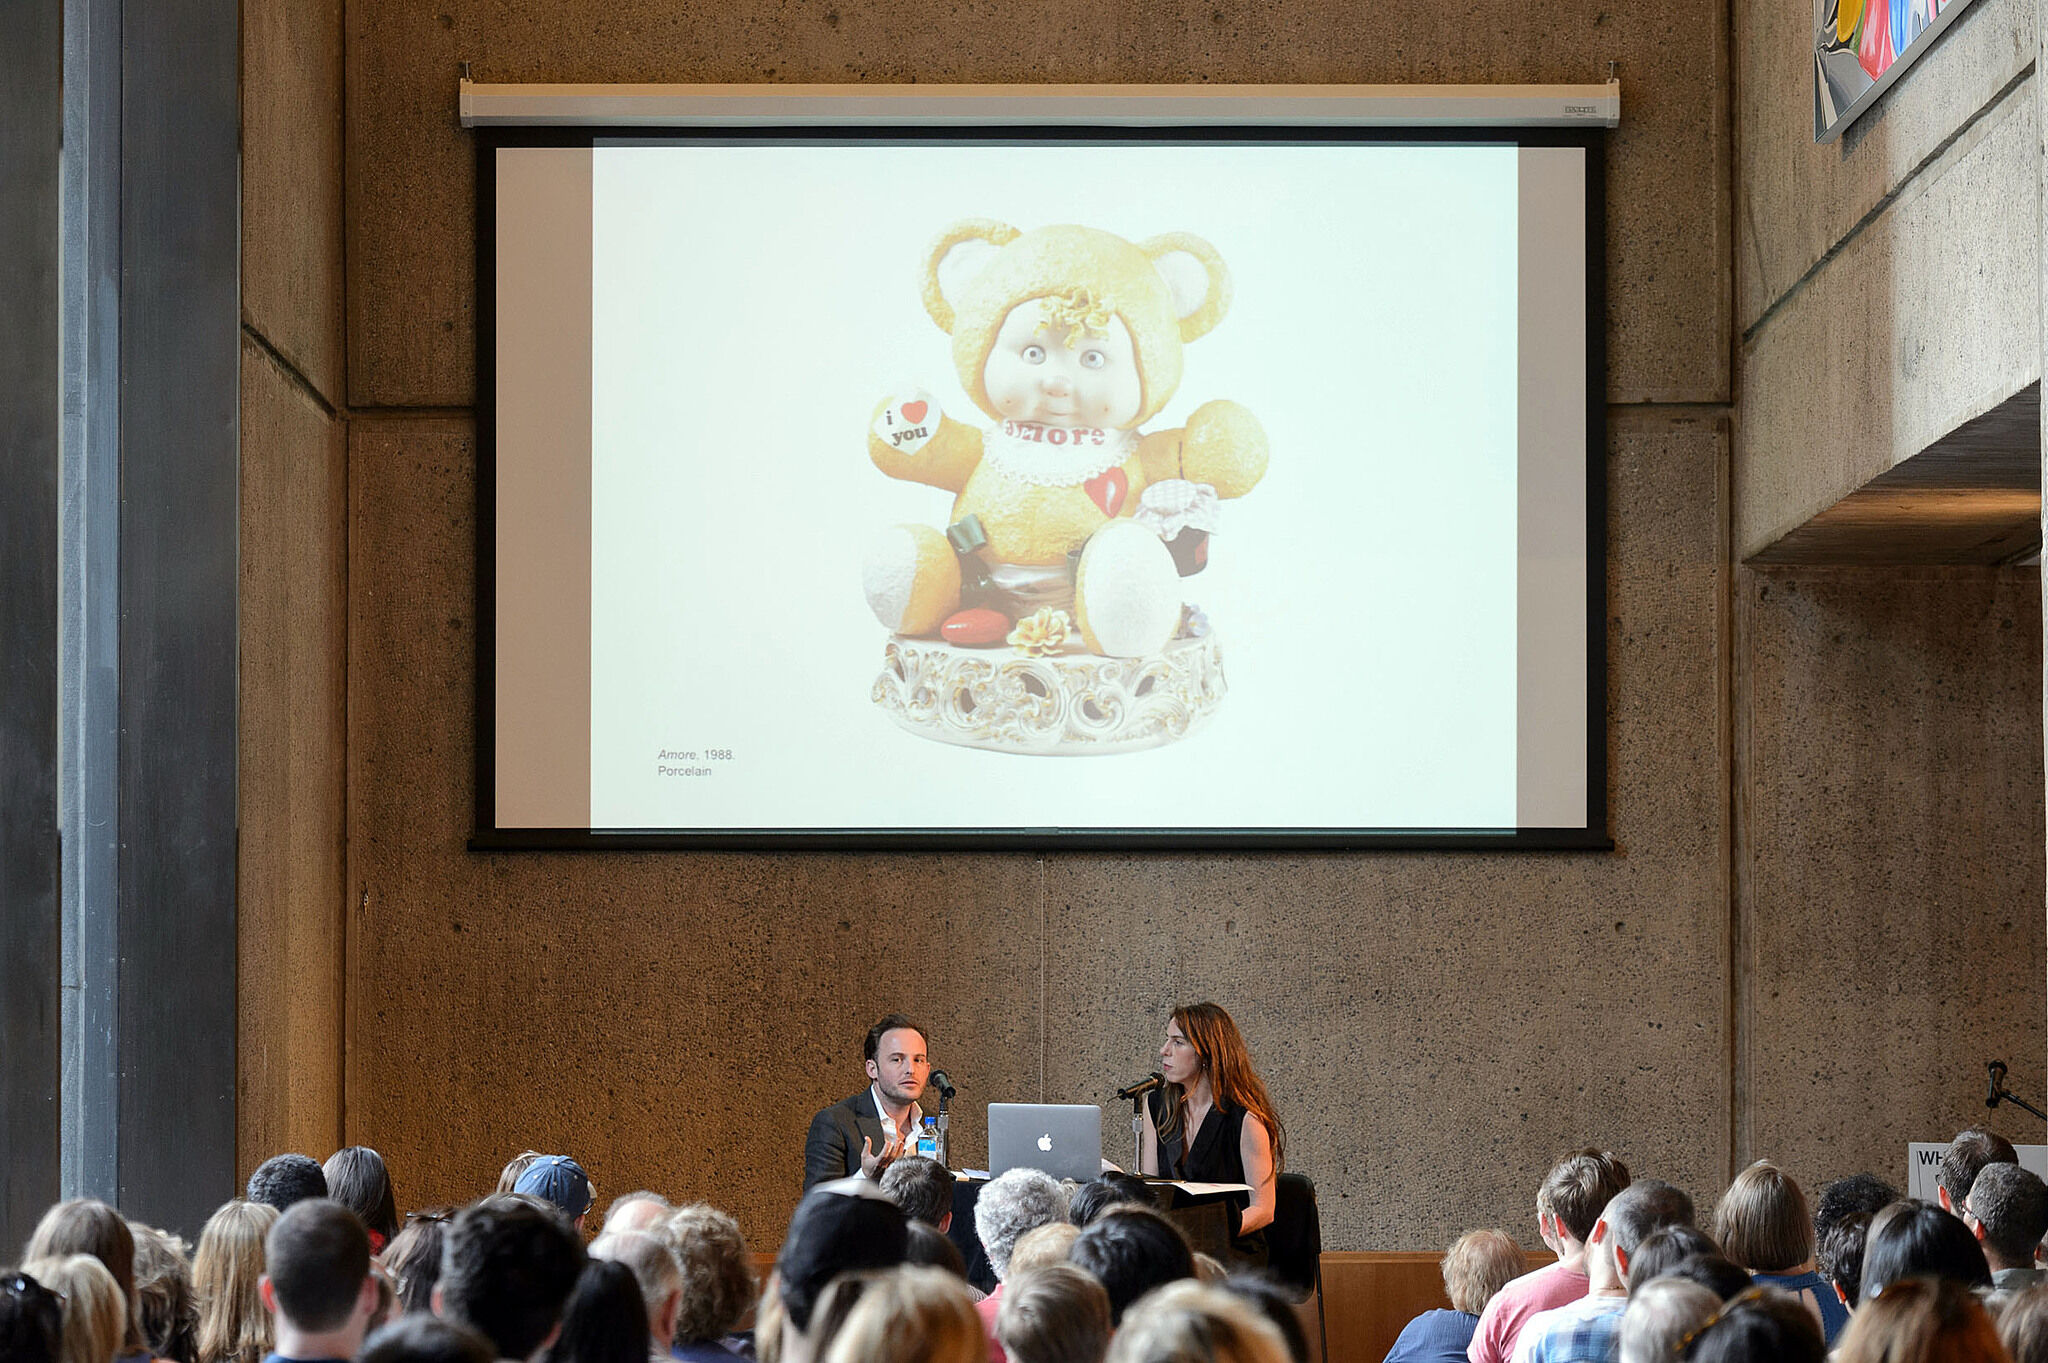 A public talk about artist Jeff Koons